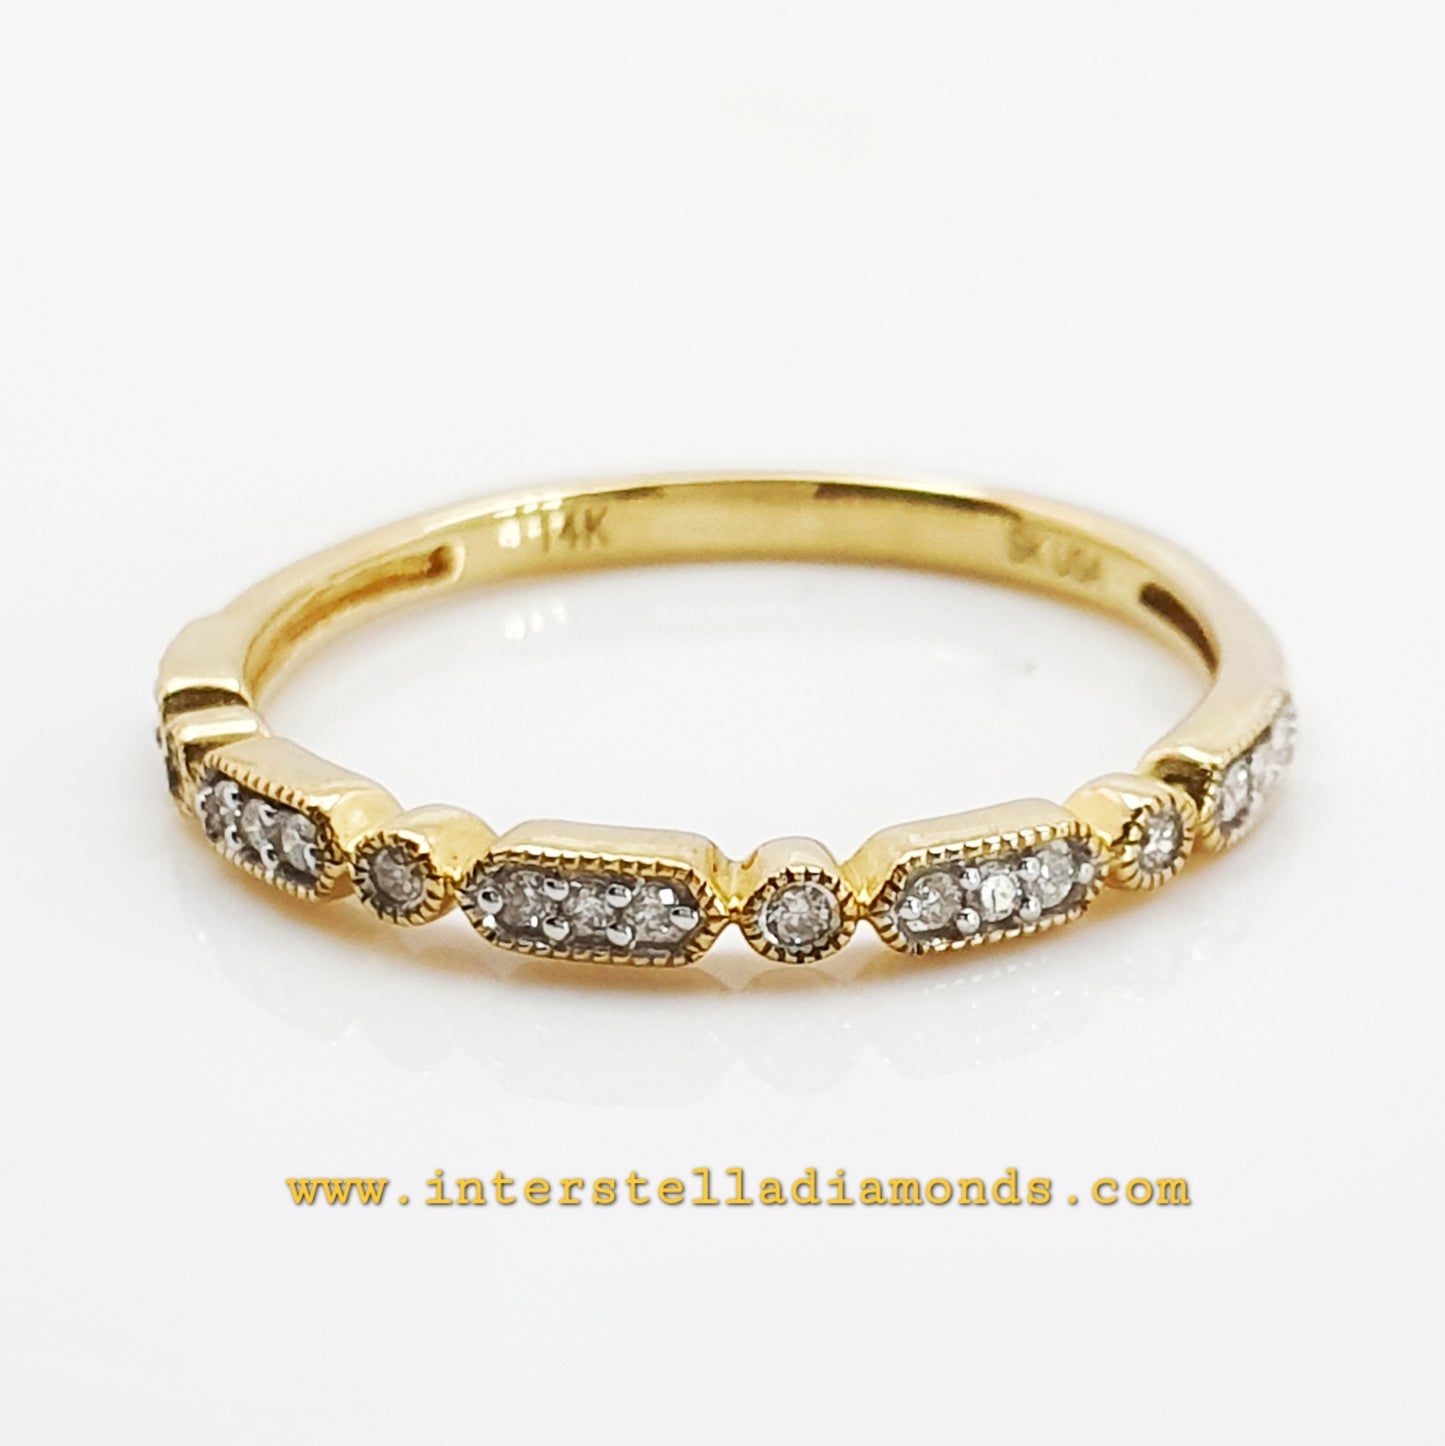 Stunning fine, 14k yellow gold wedding ring or stacker ring